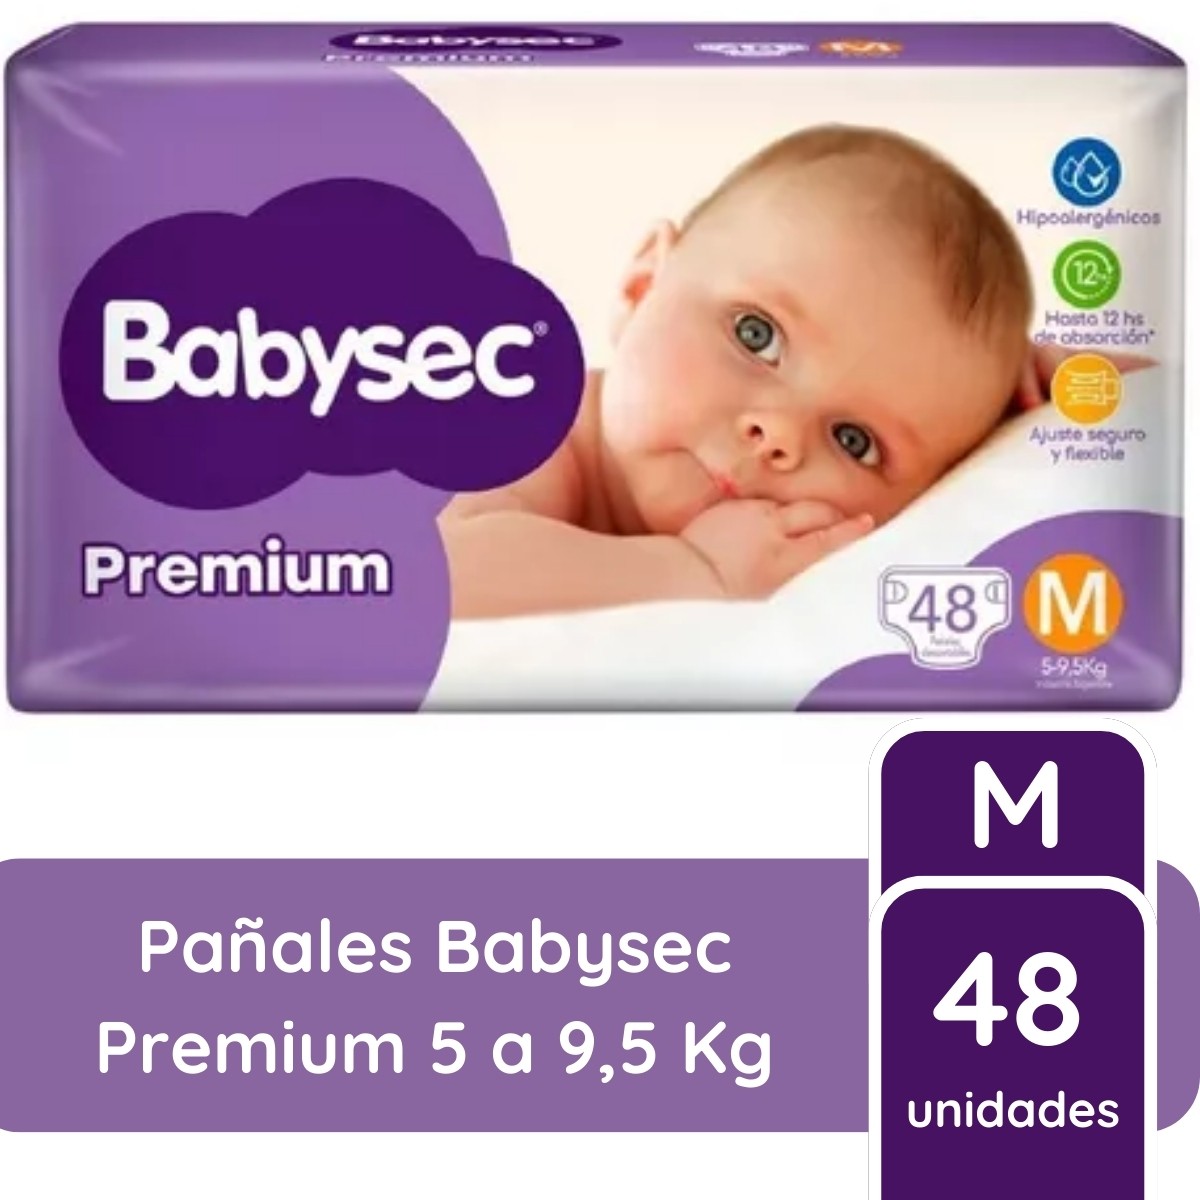 Imagen 1 de 2 de Pañales Babysec Premium M x 48 unidades